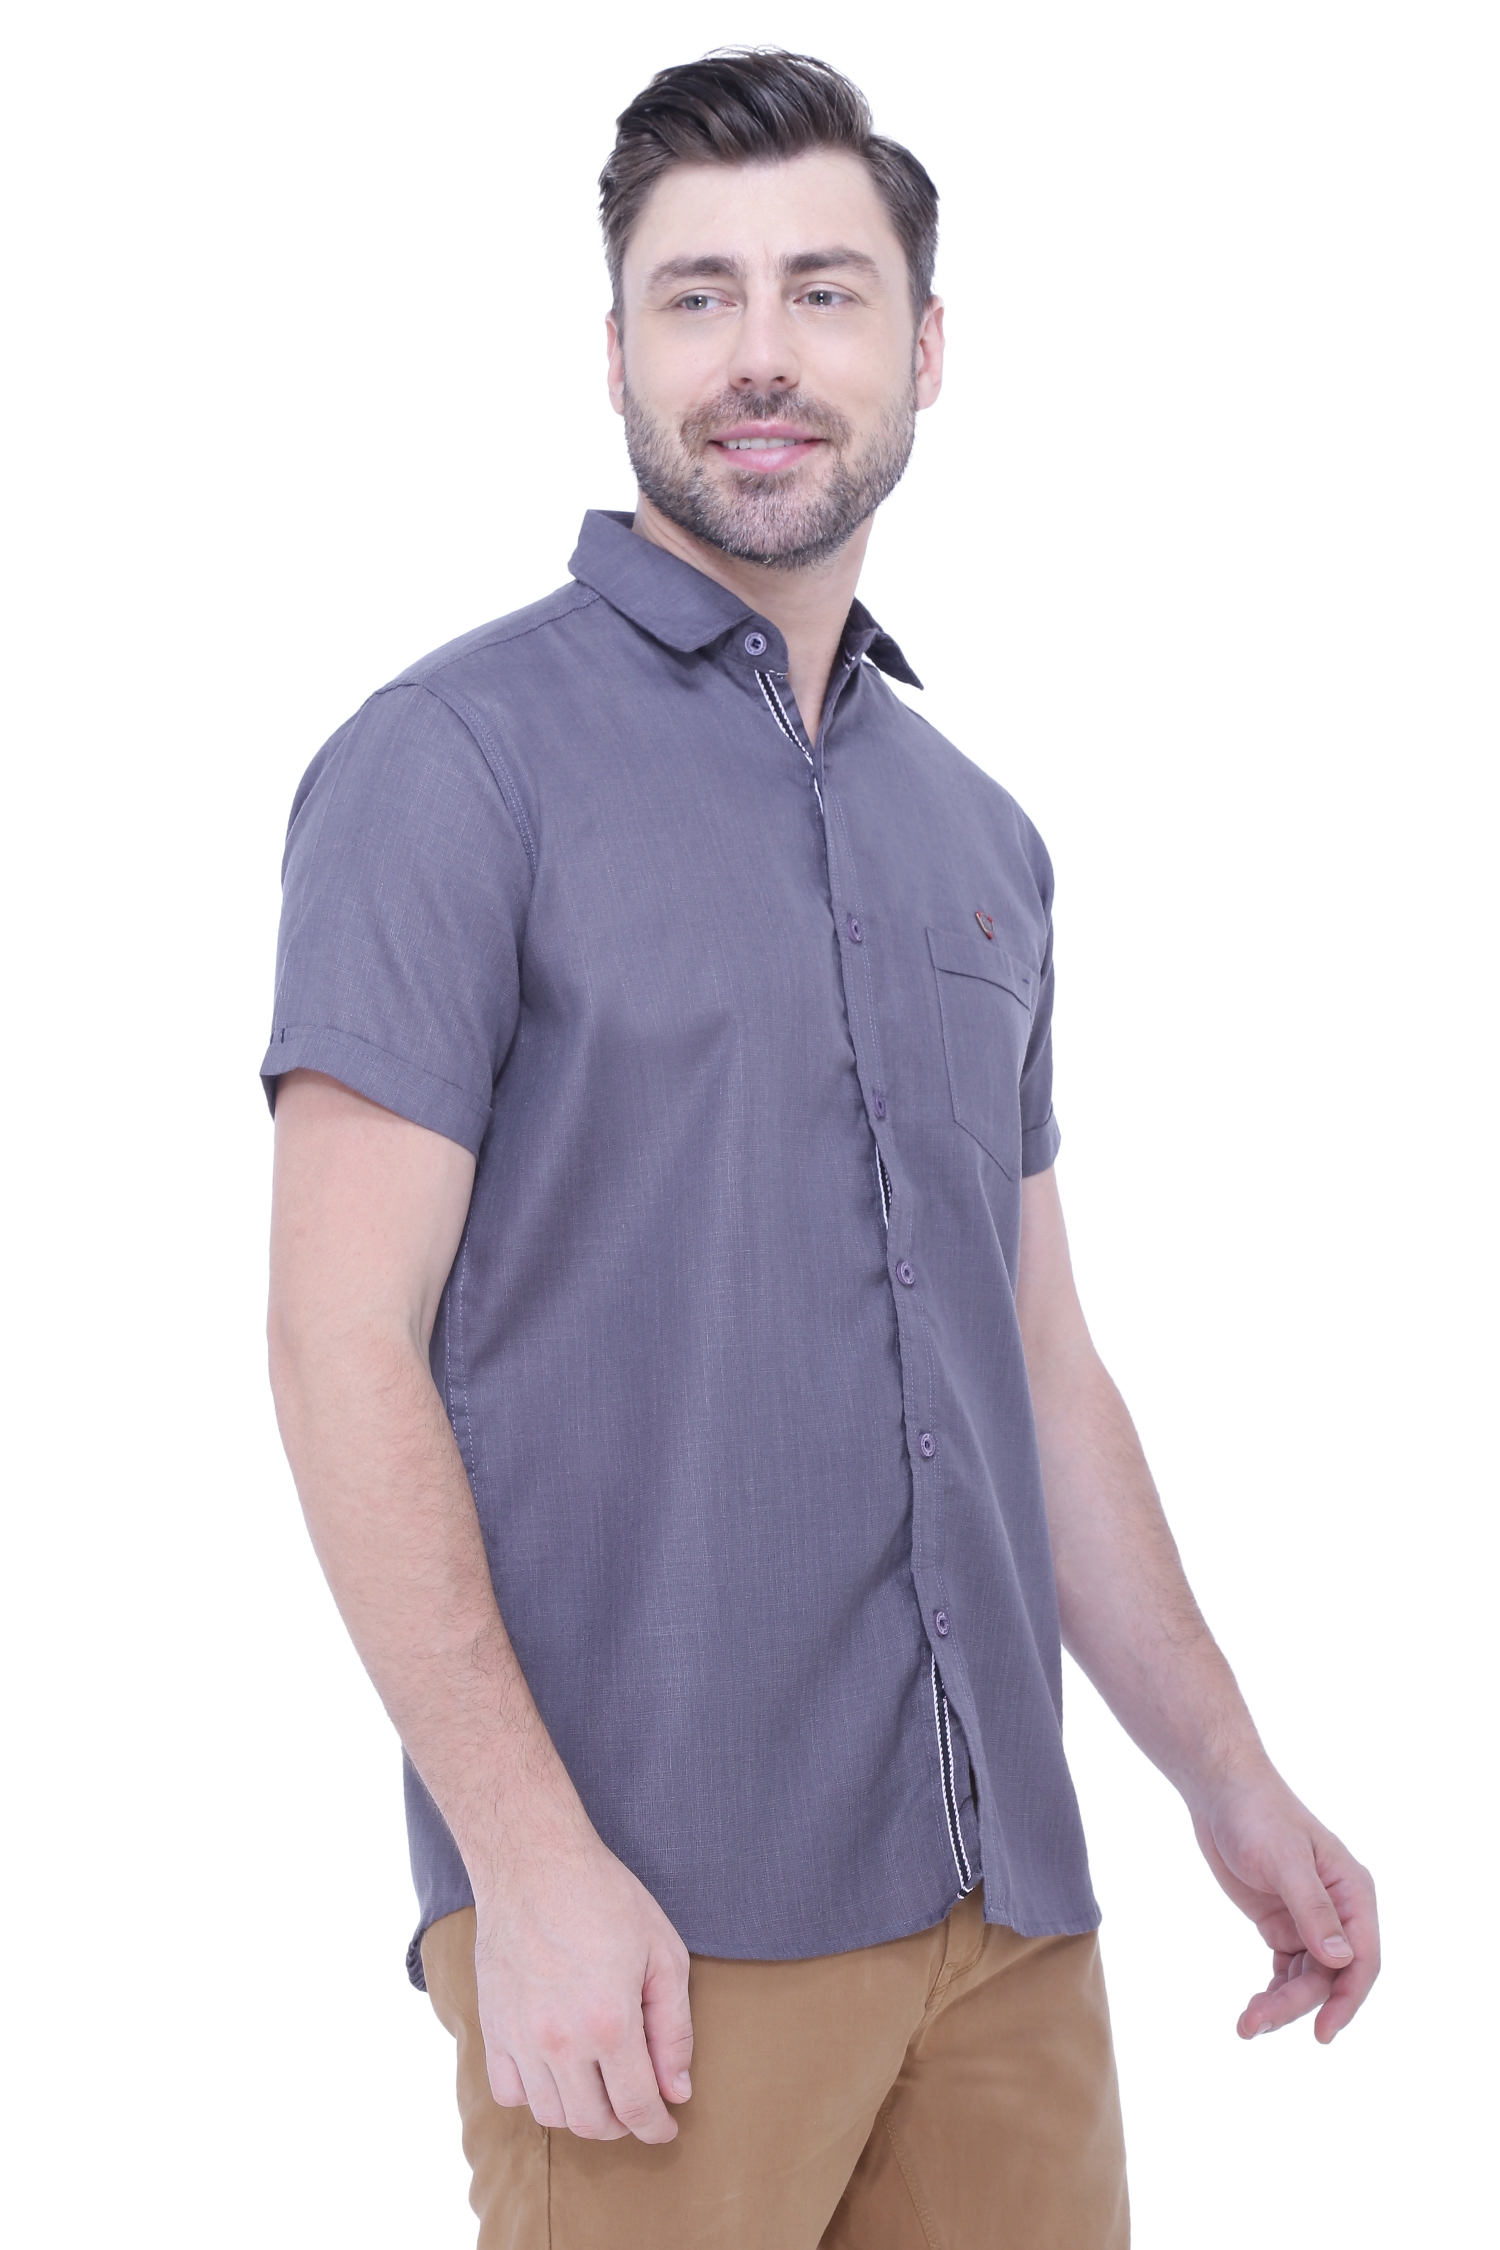 Kuons Avenue | Kuons Avenue Men's Linen Blend Half Sleeves Casual Shirt-KACLHS1221 5